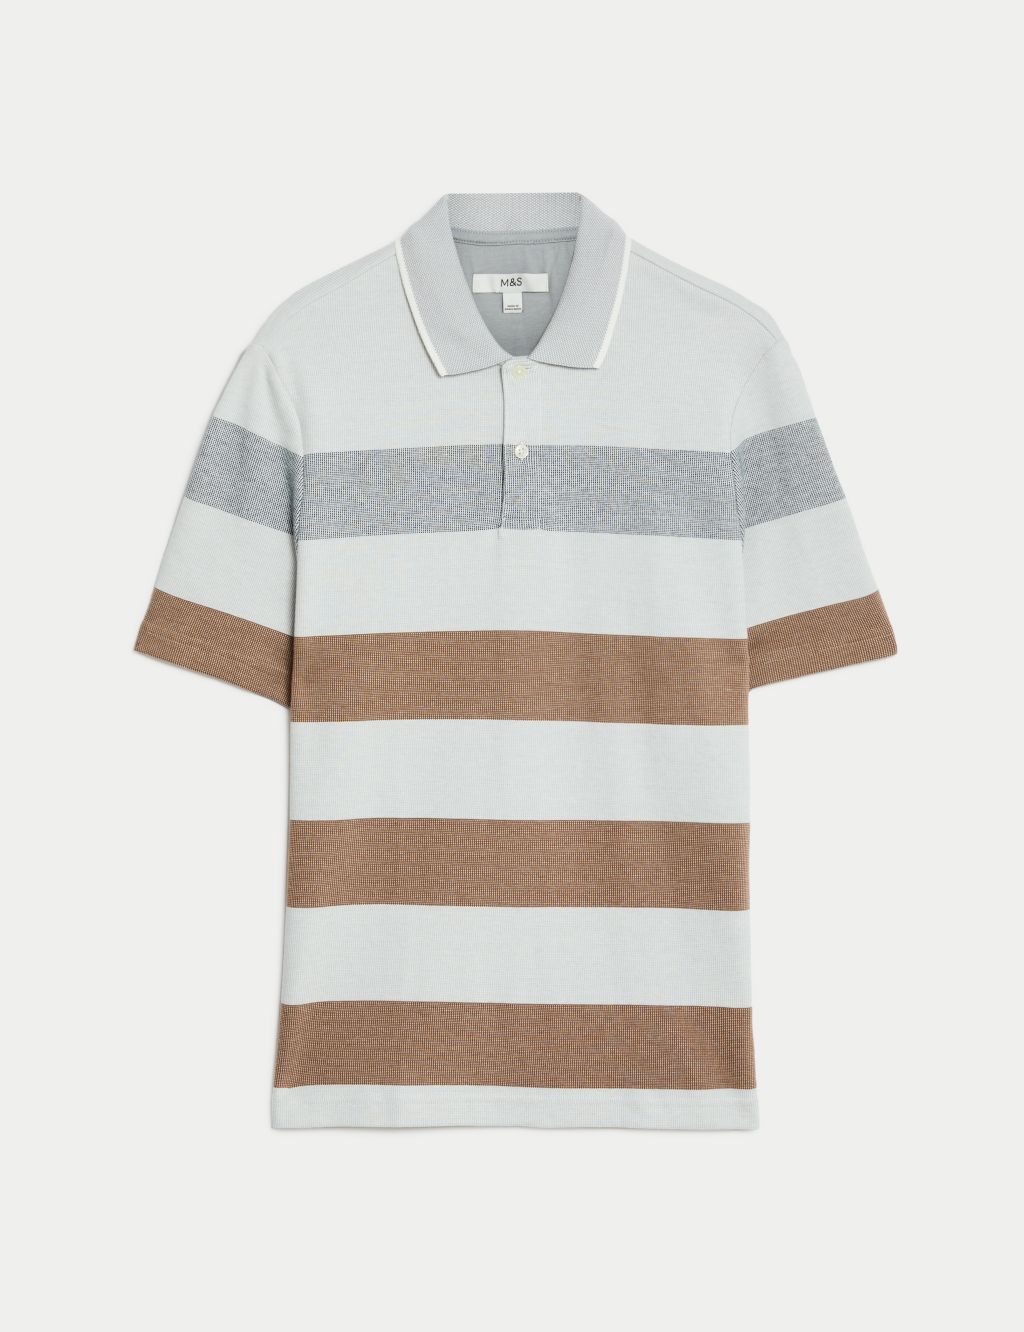 Pure Cotton Double Knit Striped Polo Shirt image 2